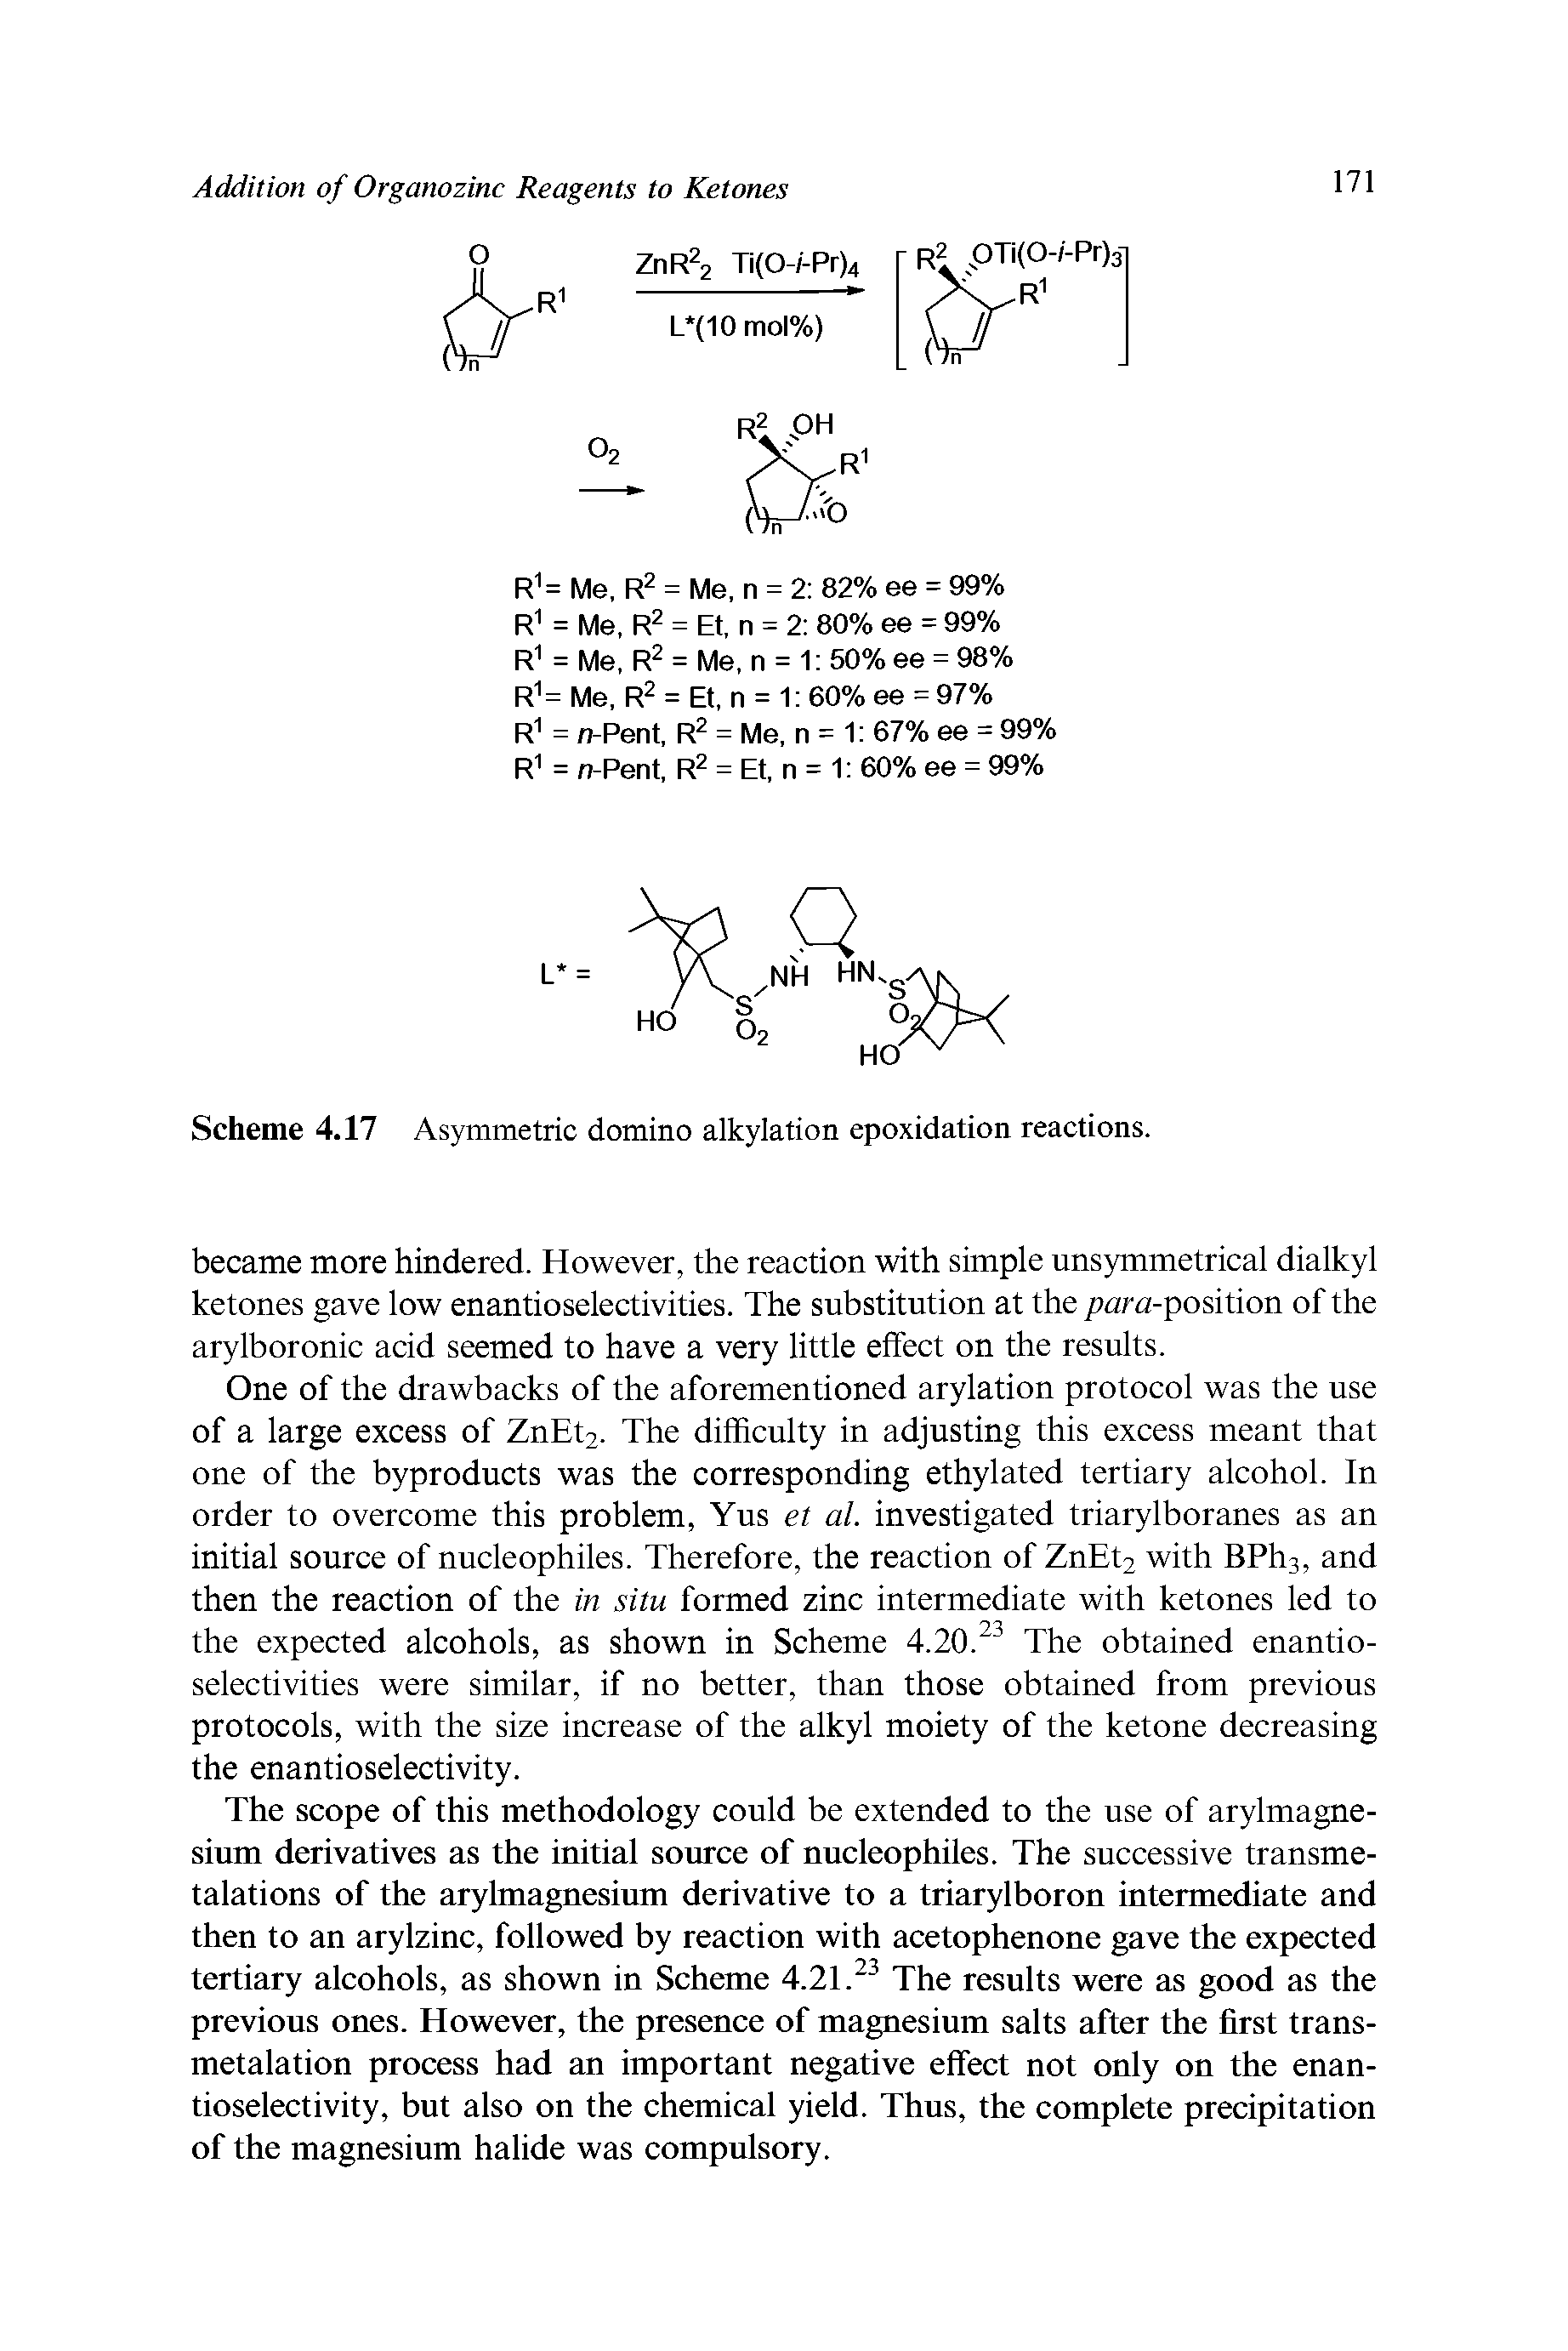 Scheme 4.17 Asymmetric domino alkylation epoxidation reactions.